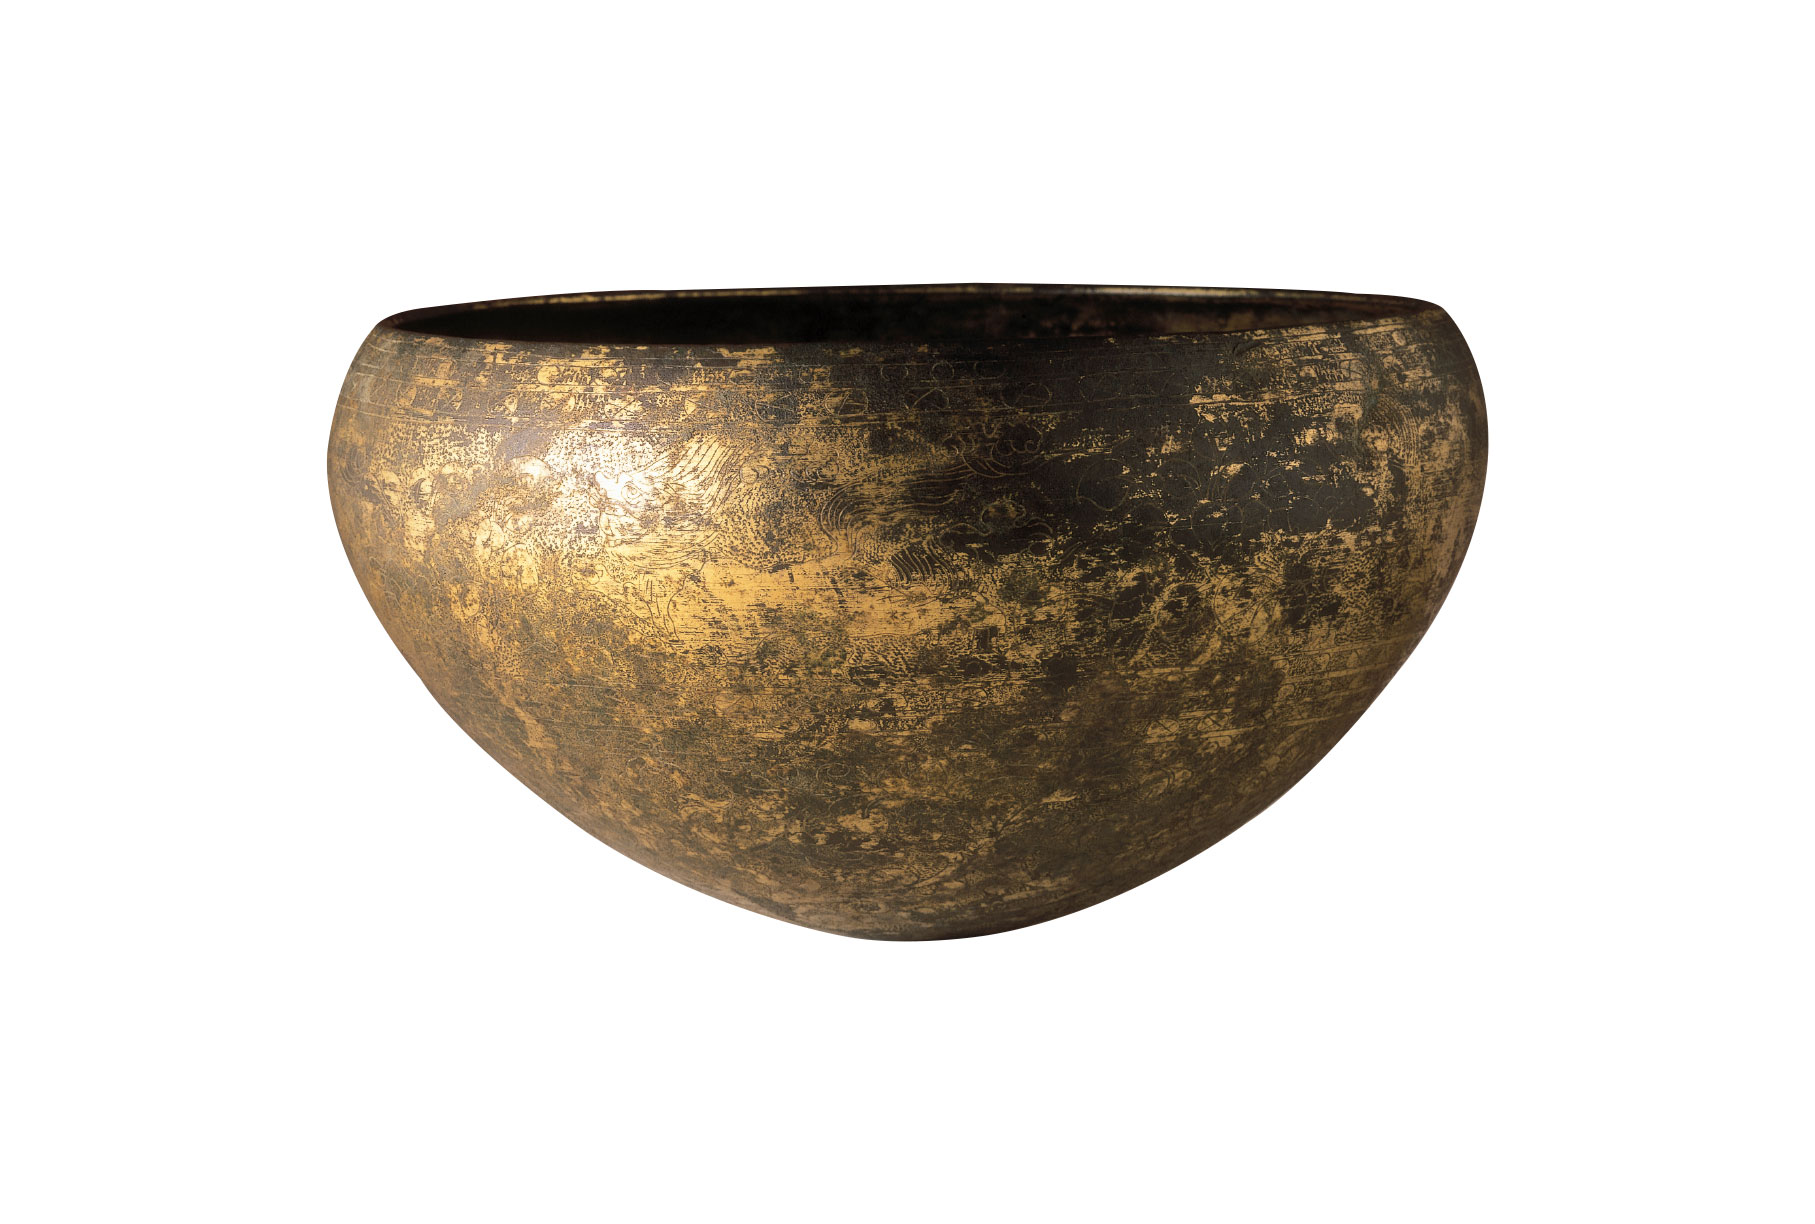 National Treasure Gilt bronze bowl with lions and Karakusa (Chinese floral) design